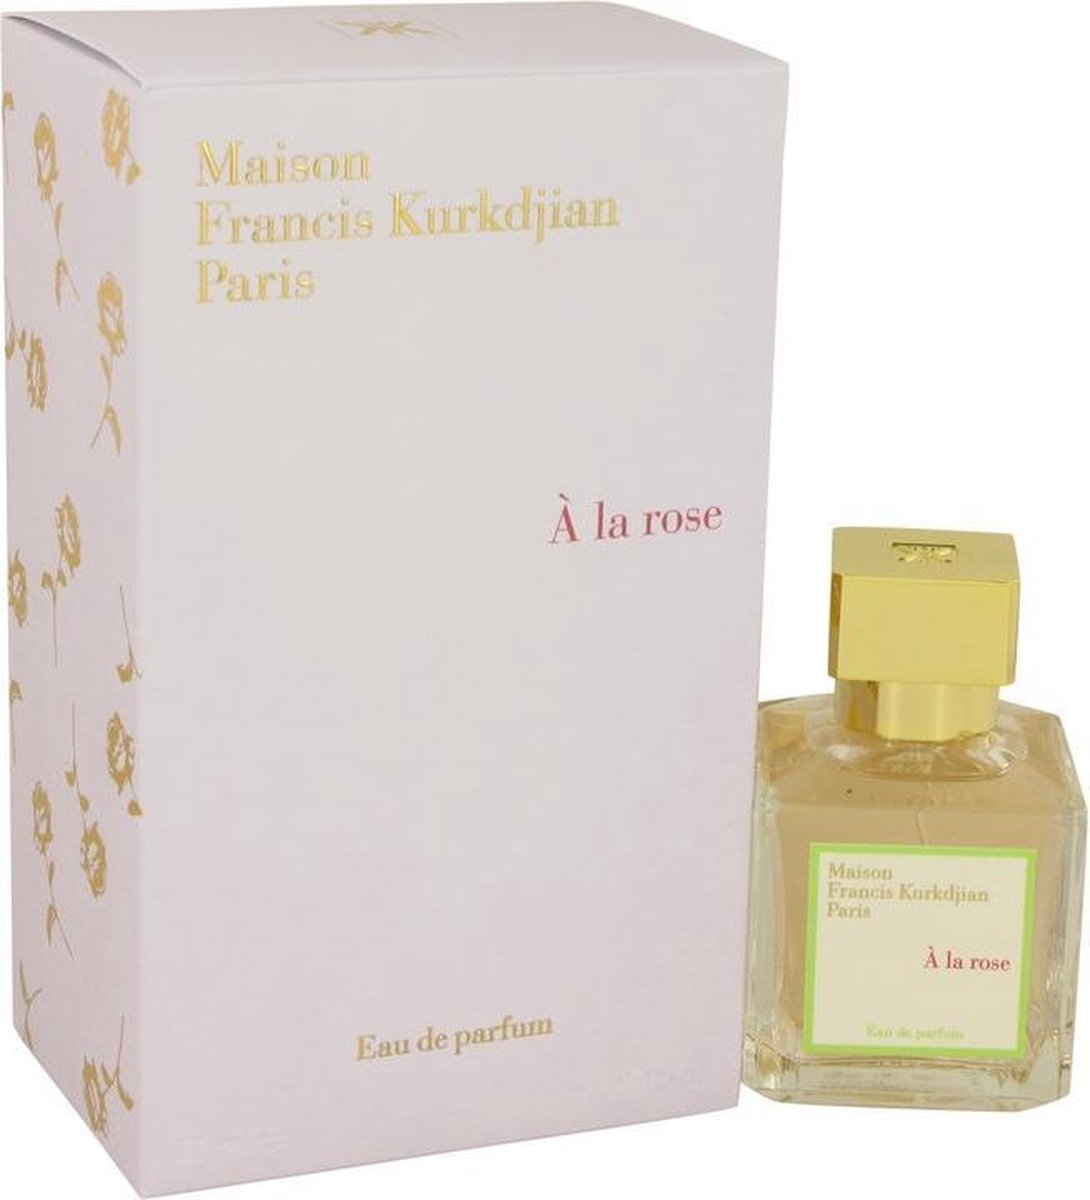 Maison Francis Kurkdjian A La Rose eau de parfum spray 75 ml